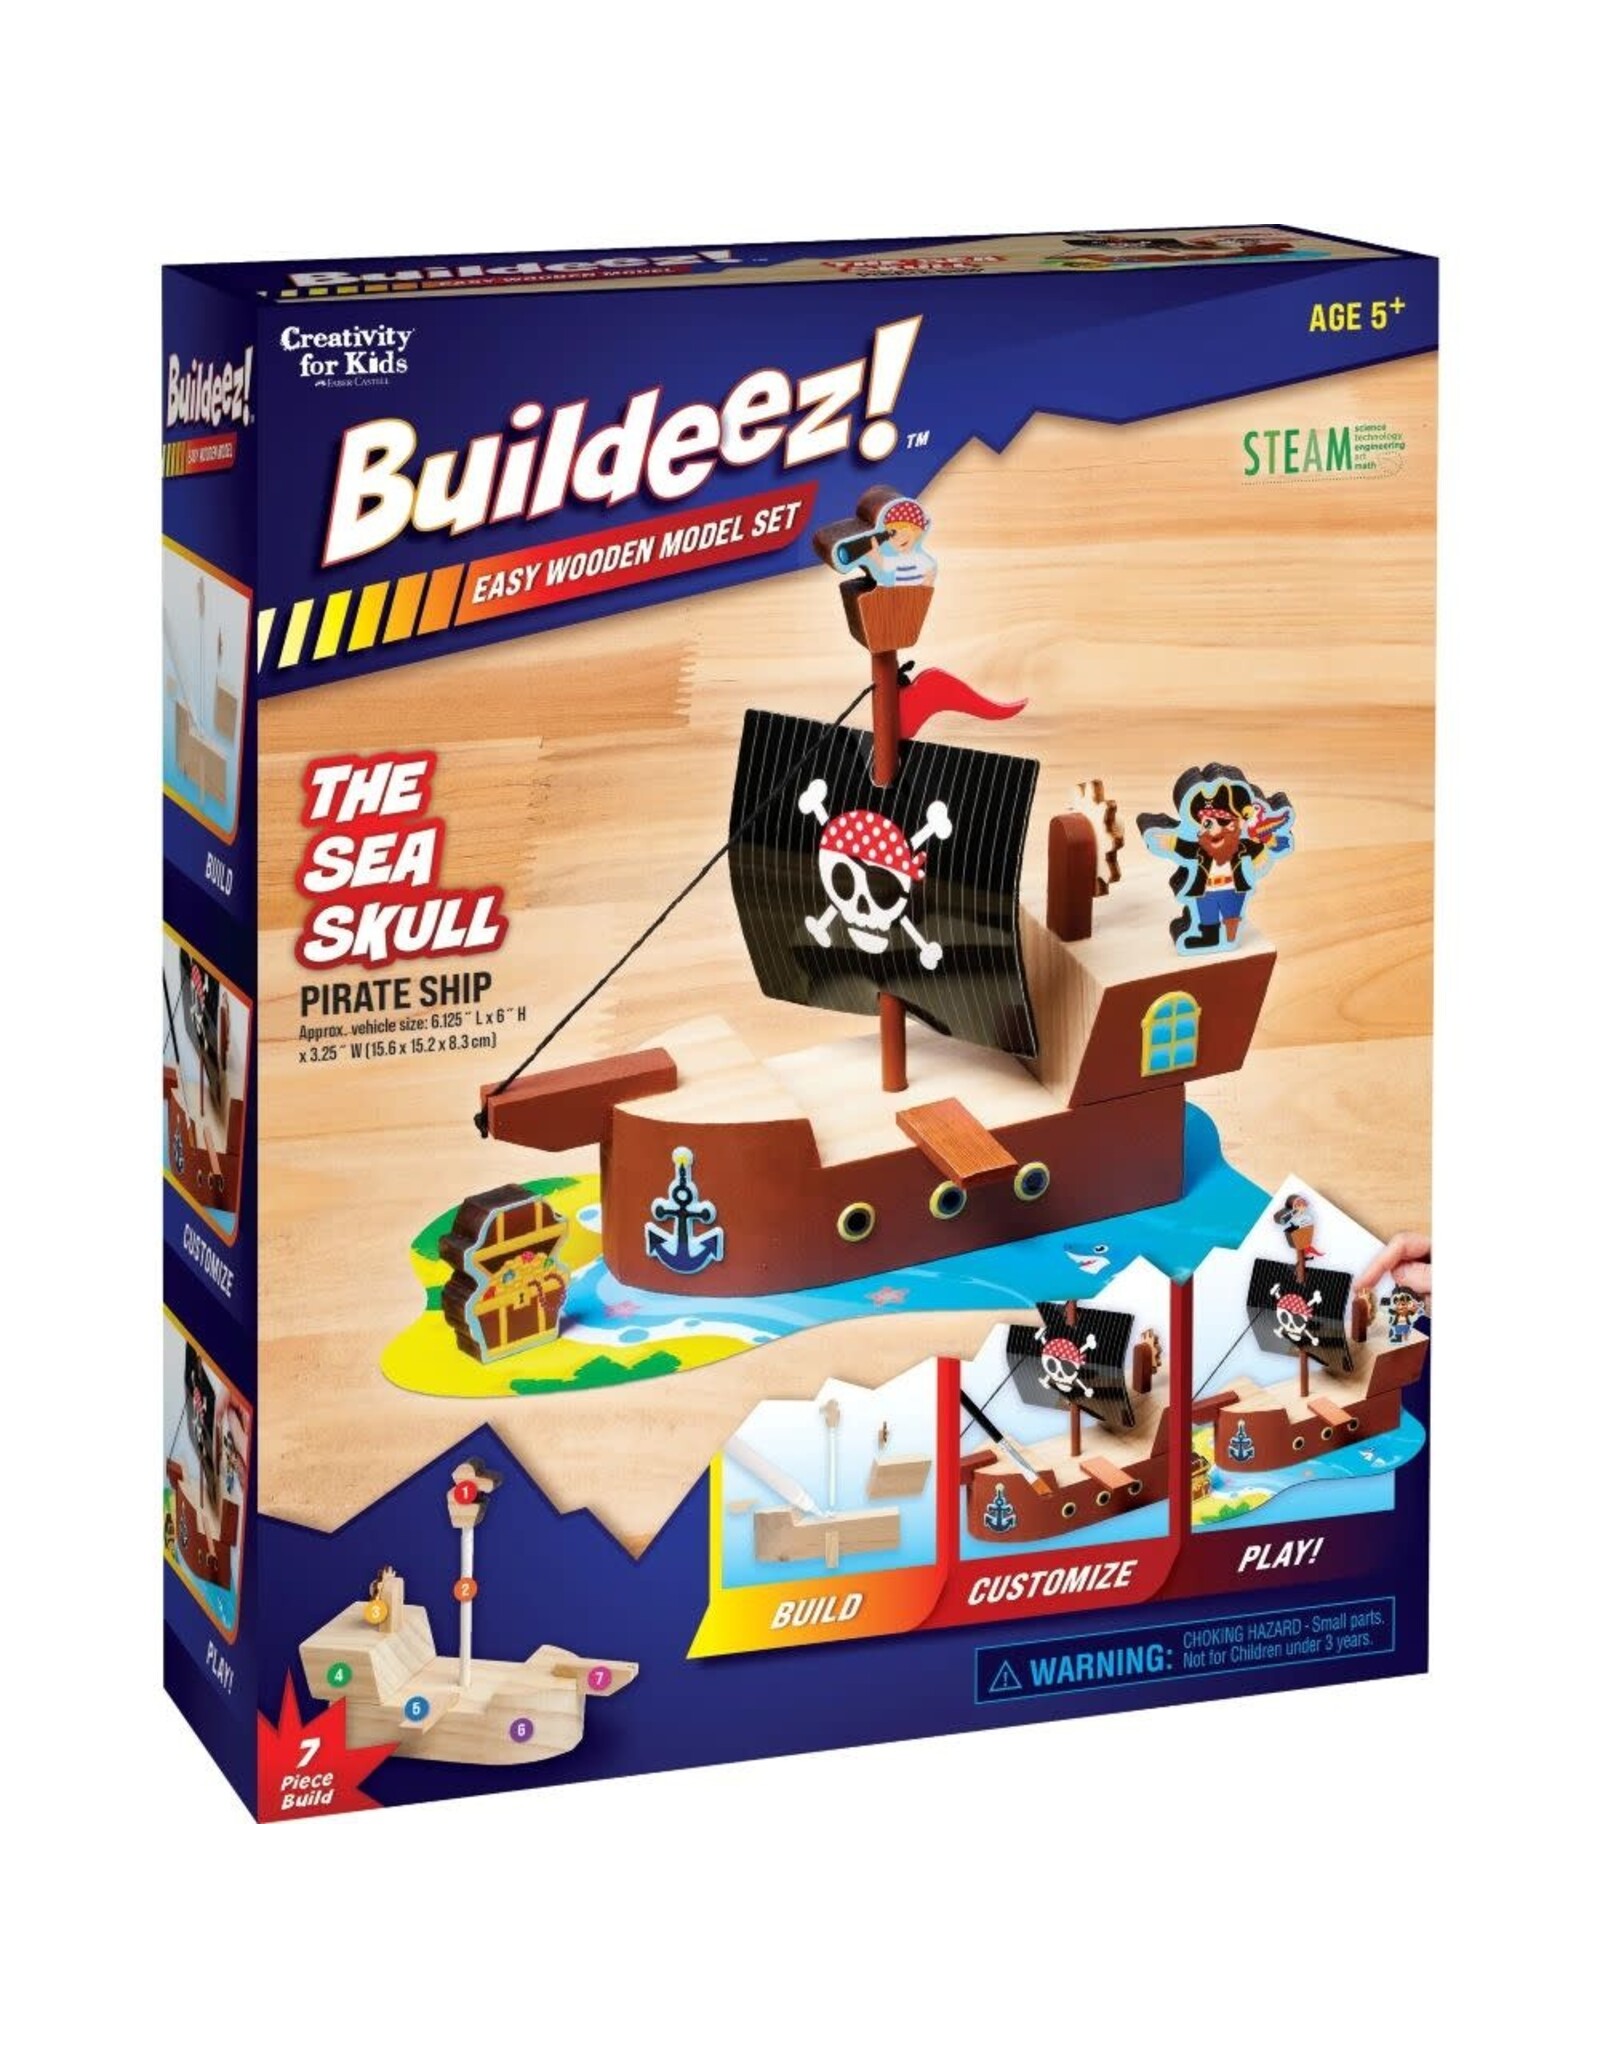 Creativity For Kids Buildeez Pirate Ship the Sea Skull